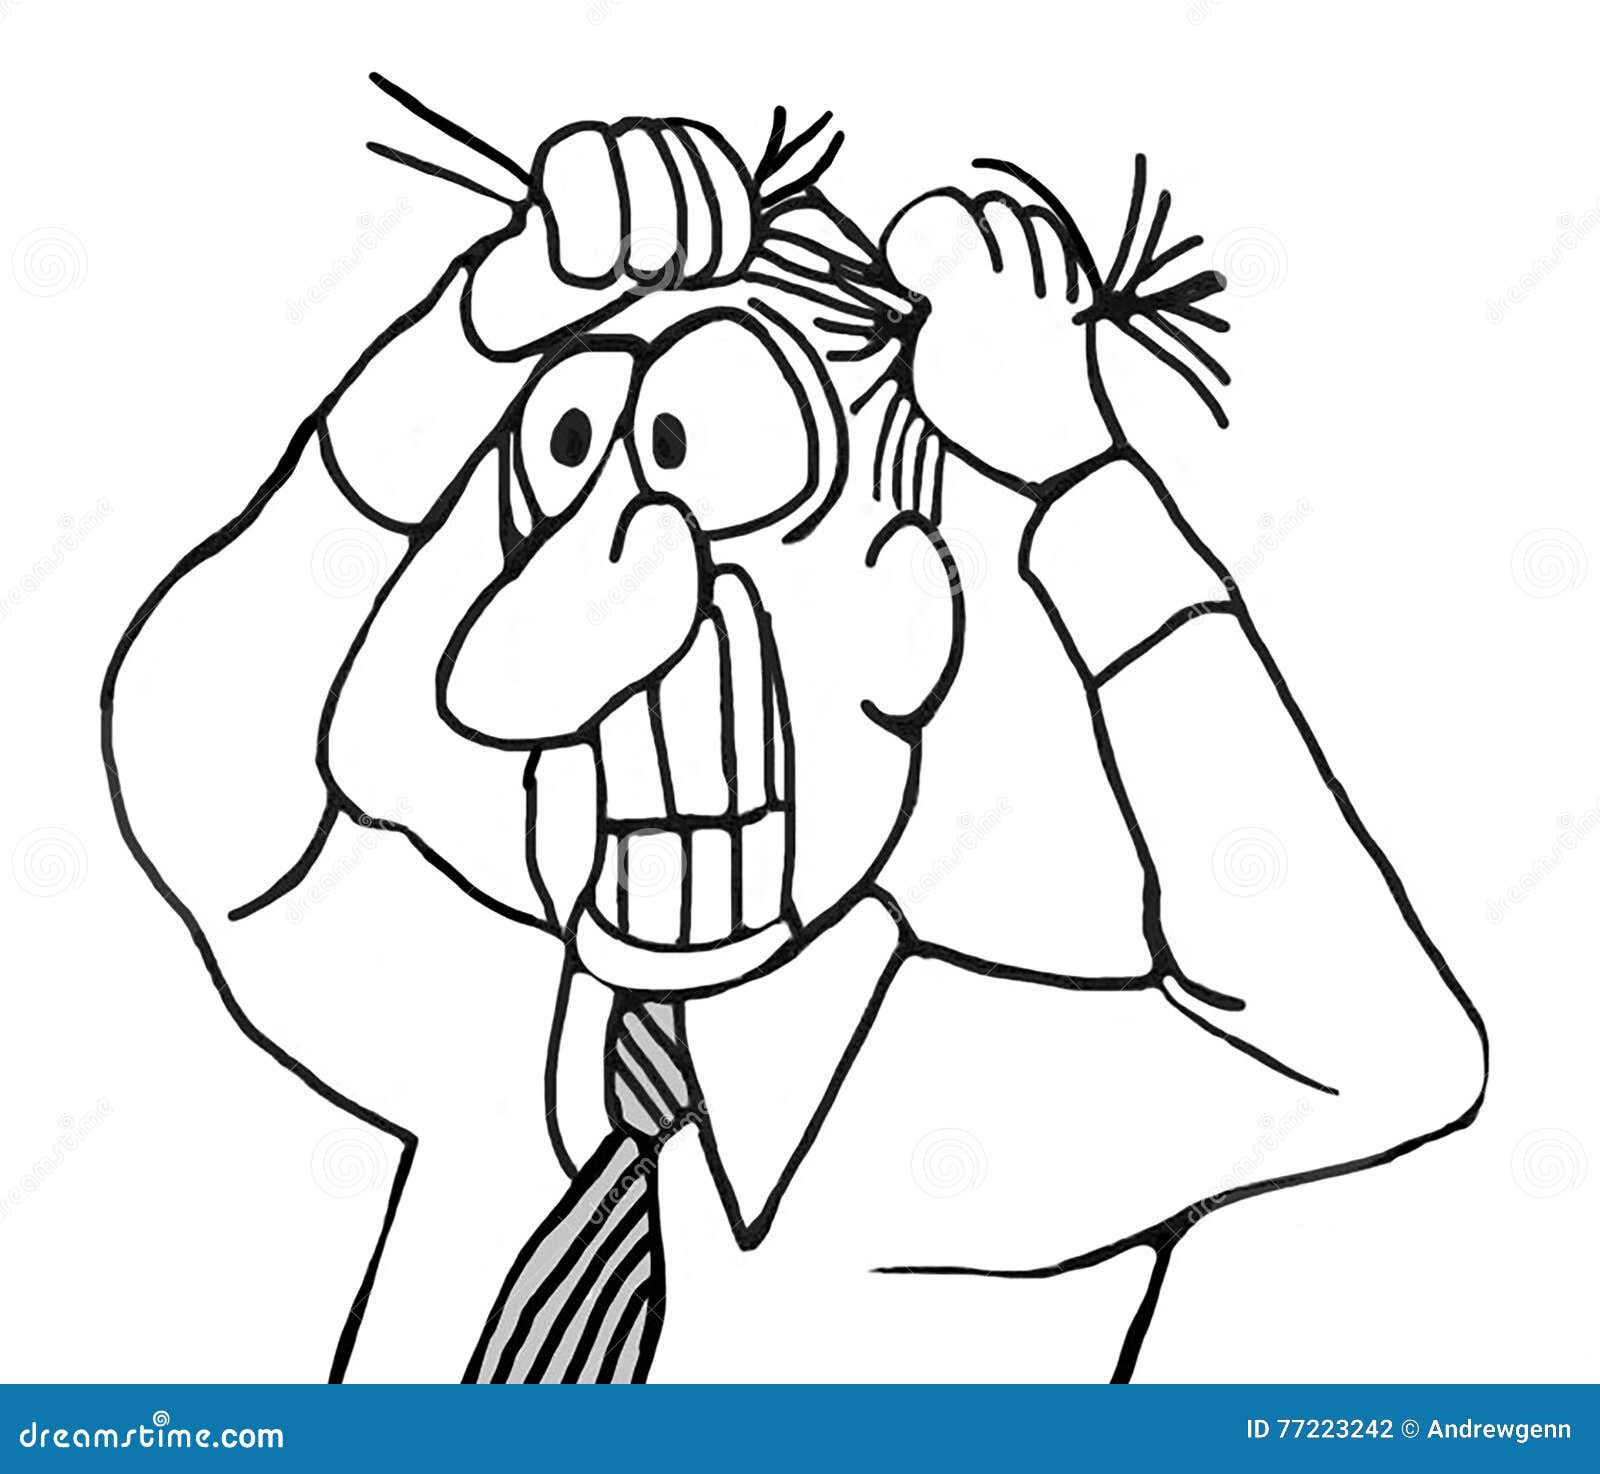 Frustrated Businessman stock illustration. Illustration of peer - 77223242